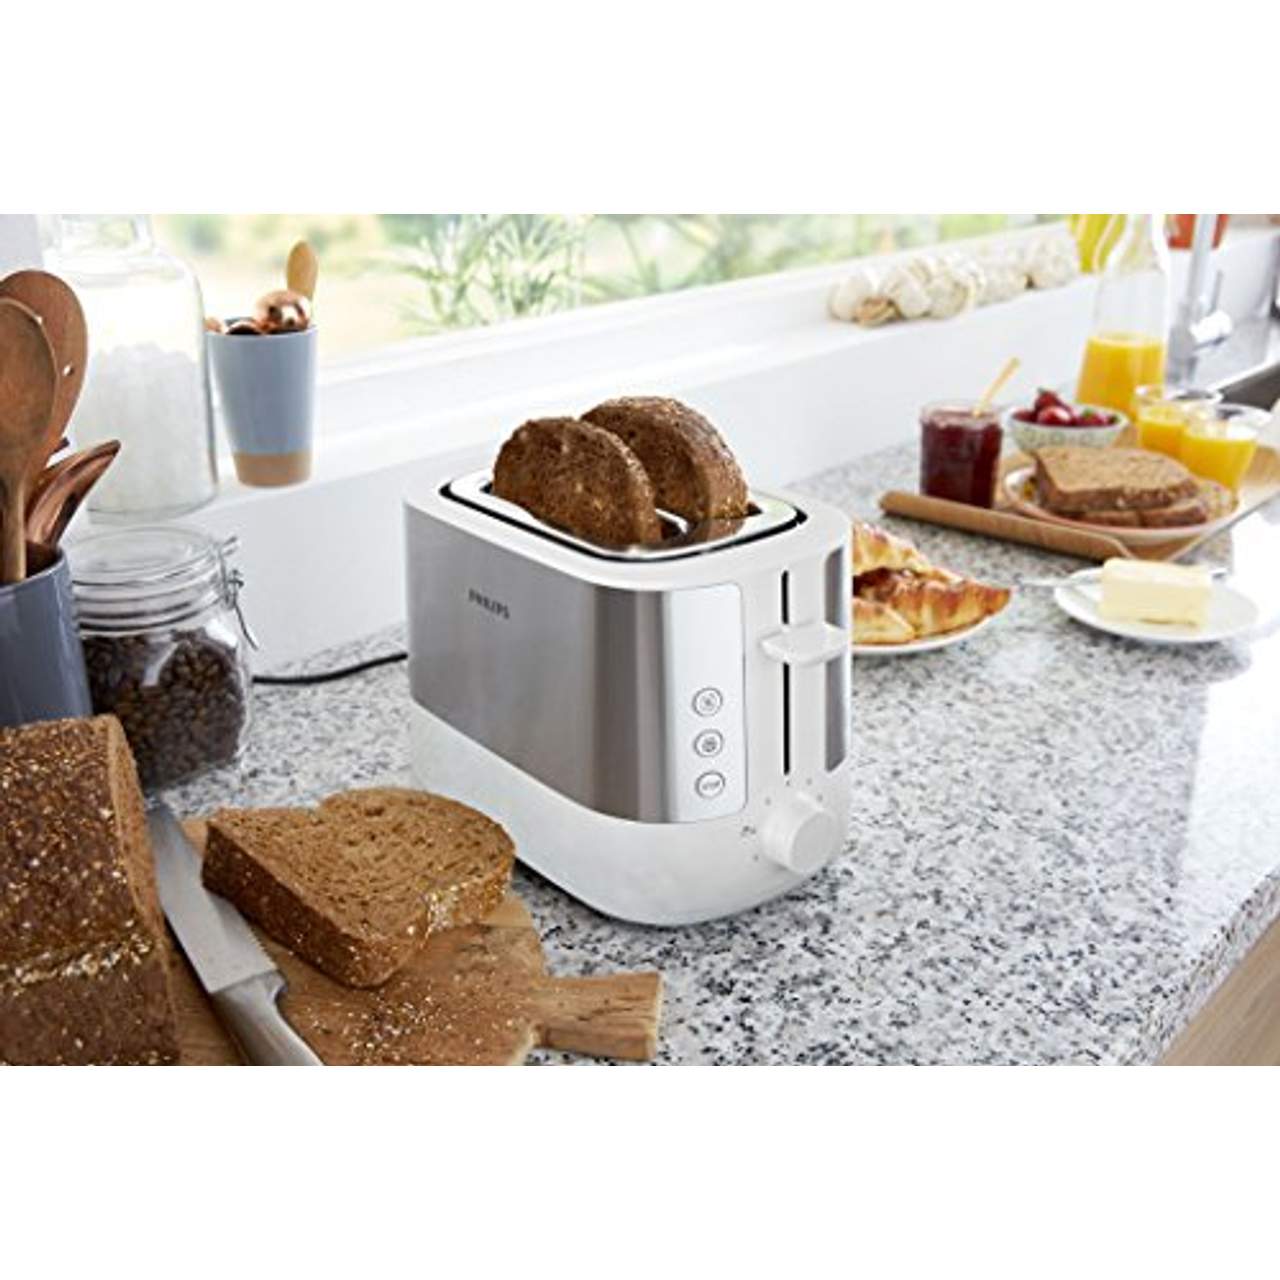 Philips HD2637/00 Toaster weiß